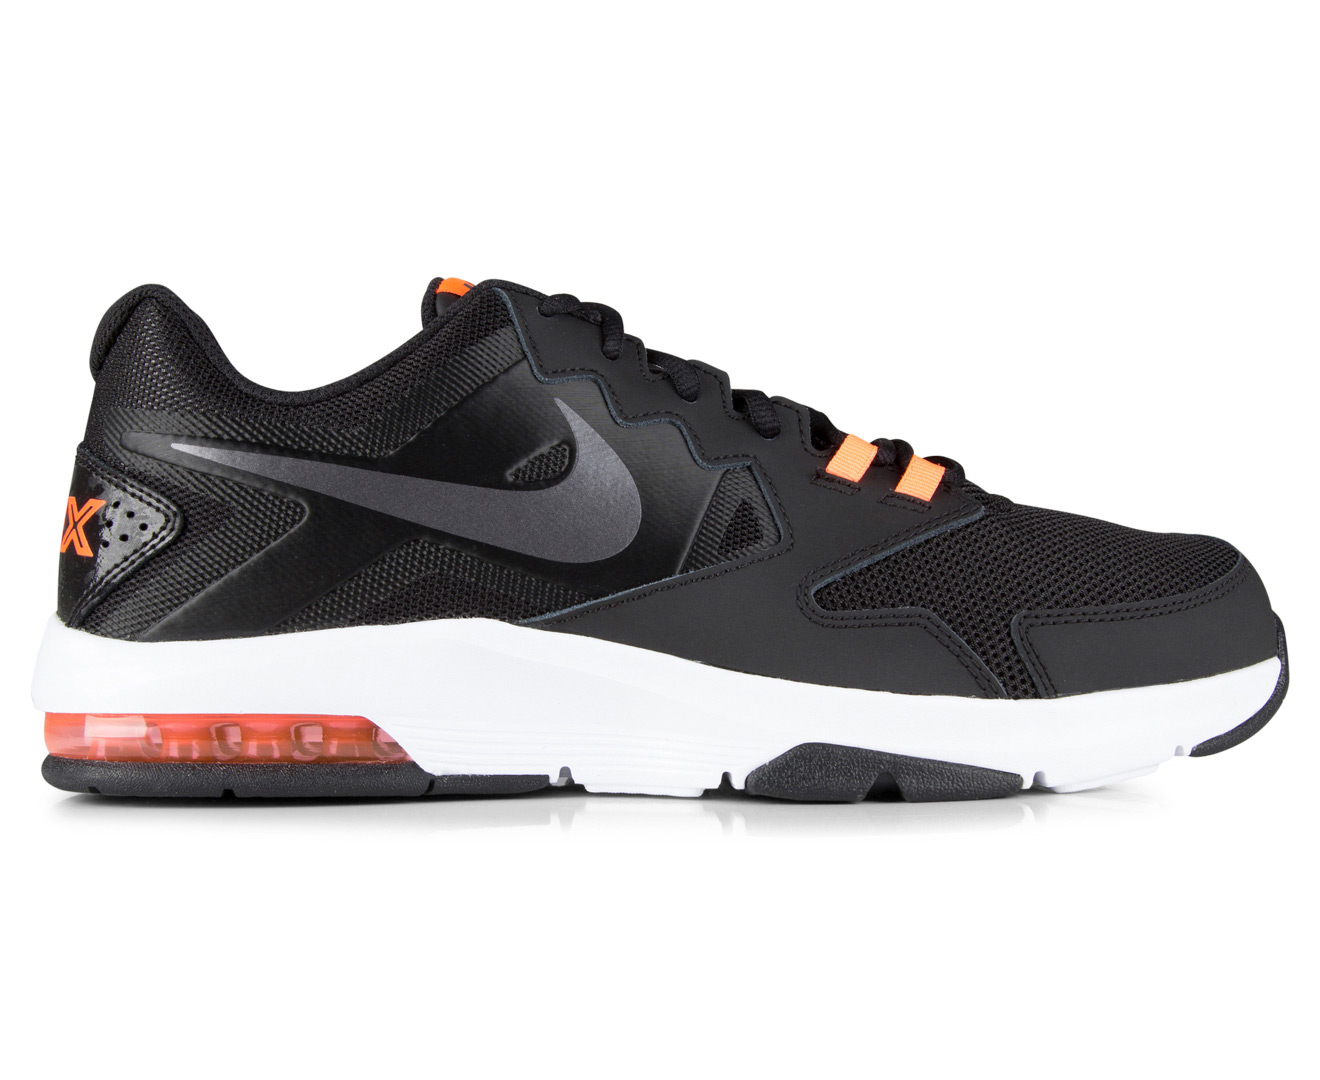 Nike Men's Air Max Crusher Shoe - Black/Metallic/Dark Grey/Hyper Orange | Catch.com.au